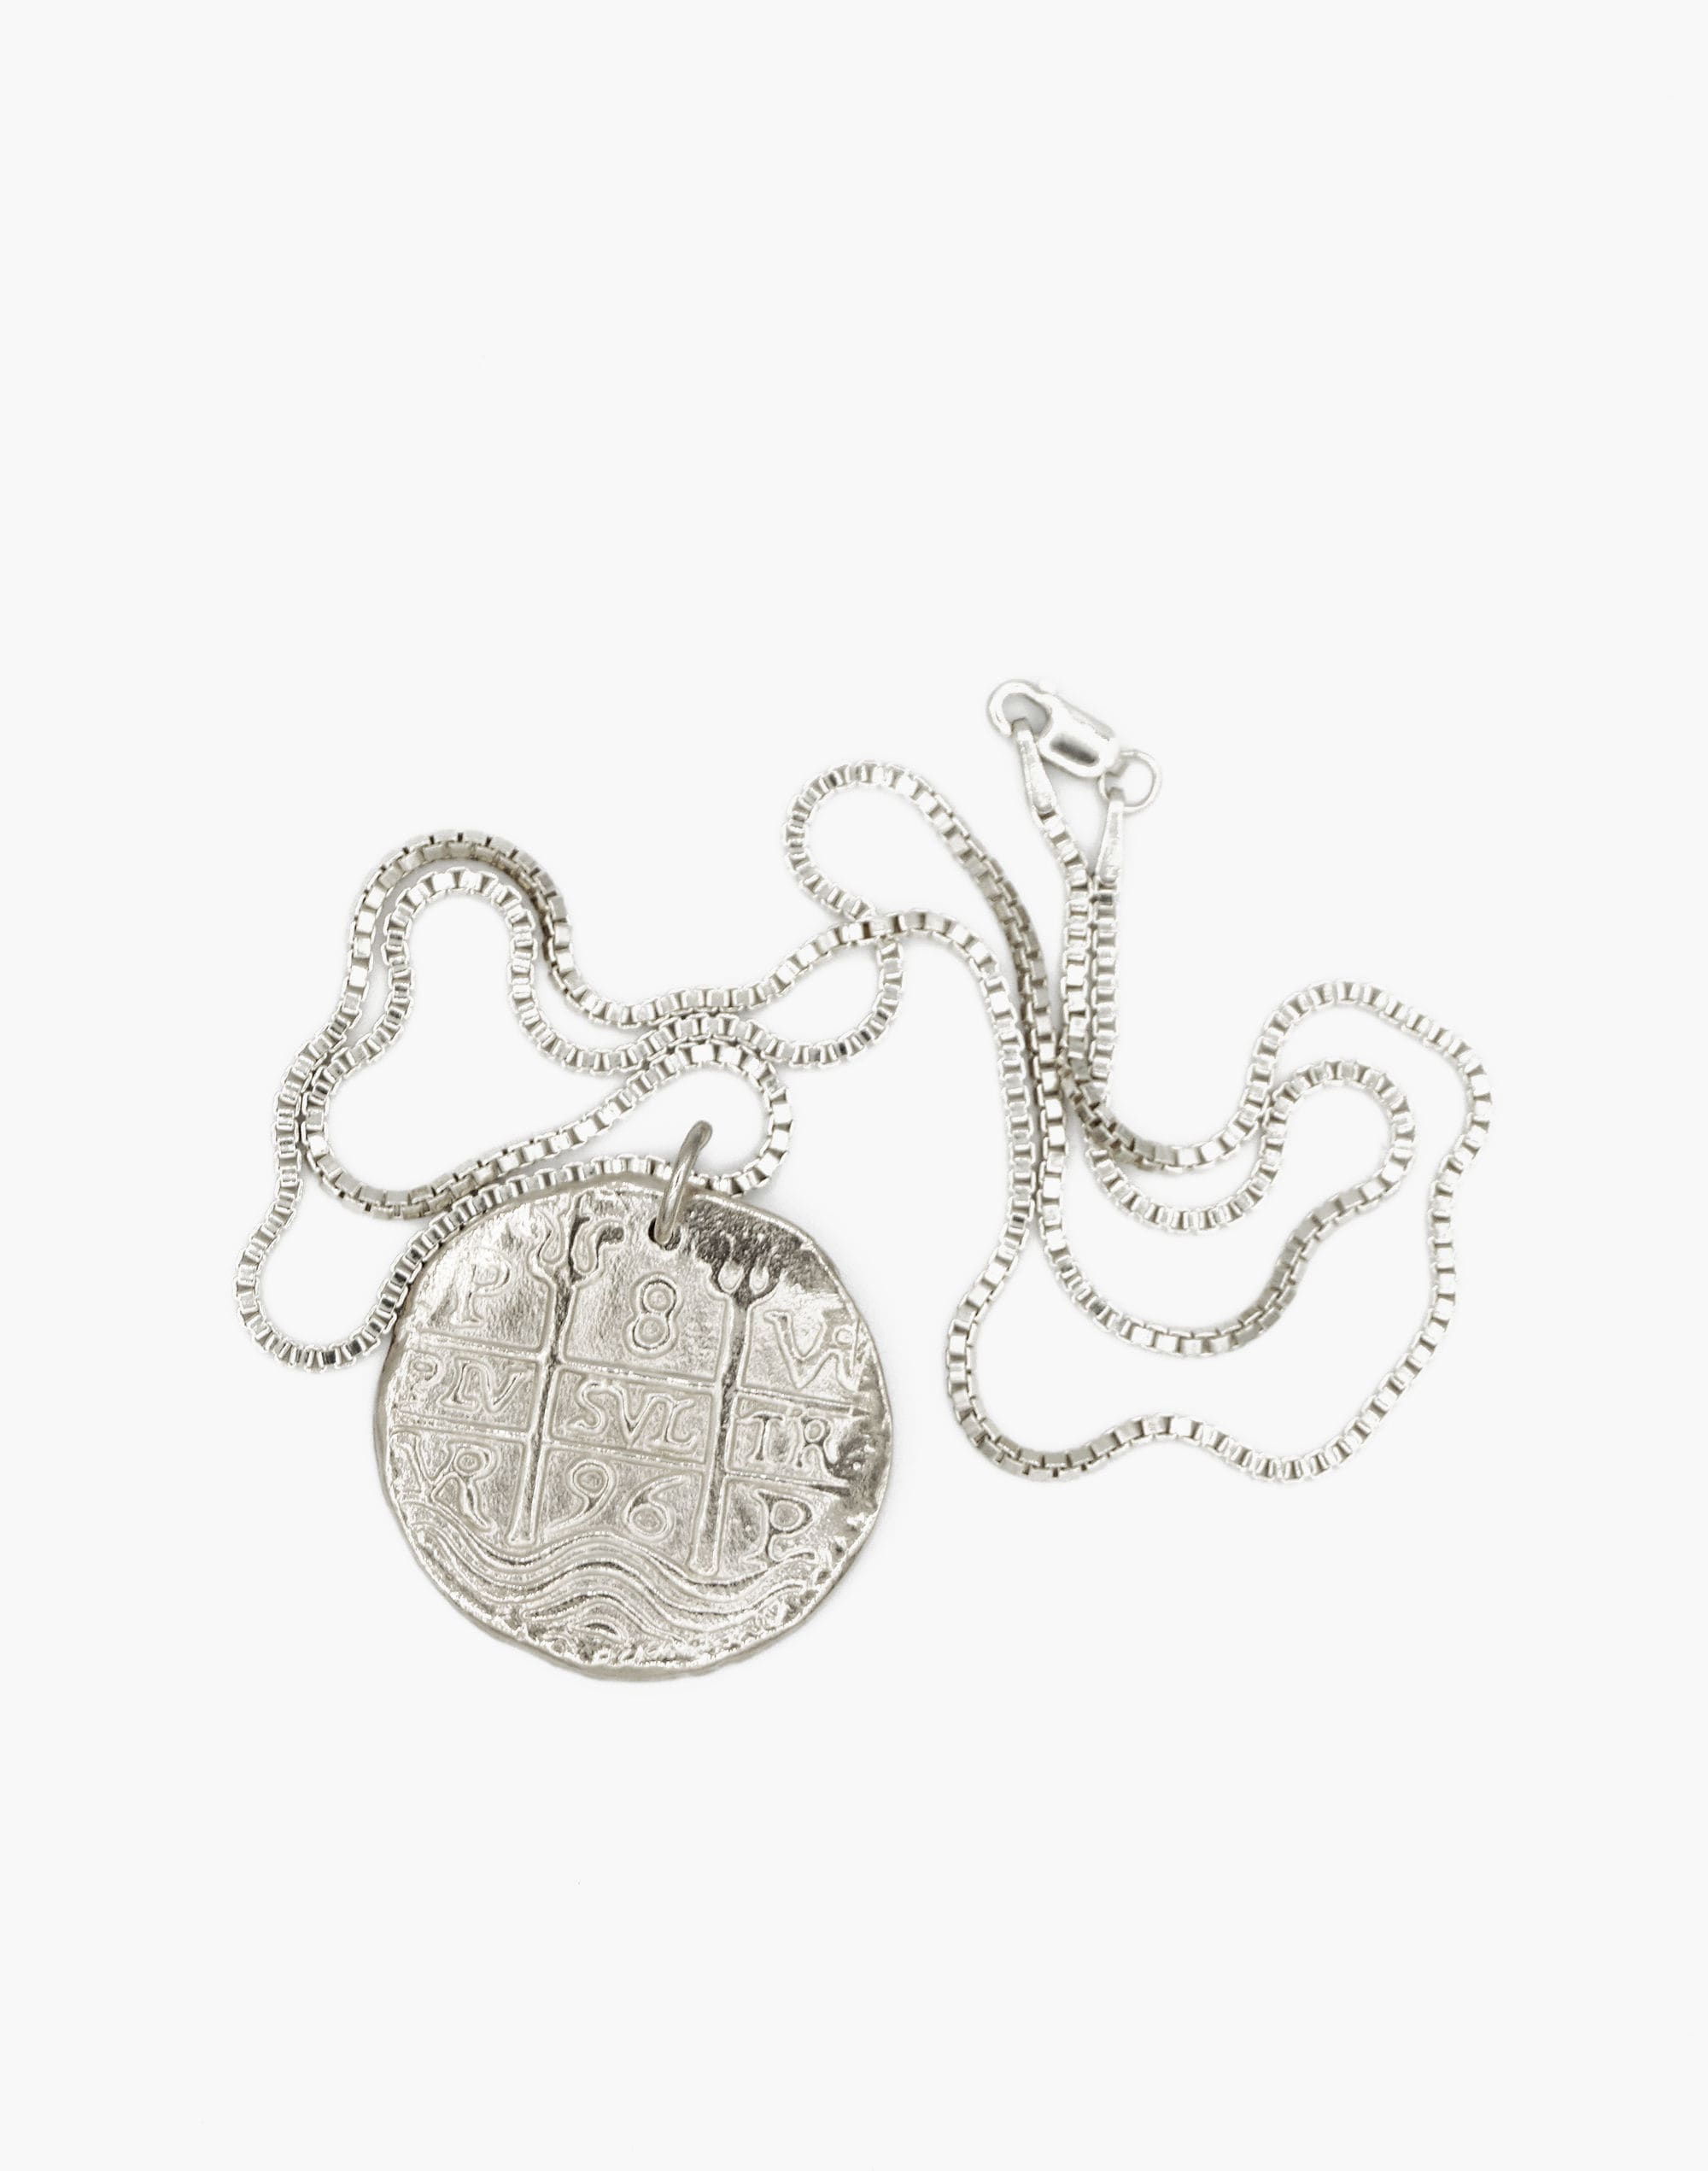 Charlotte Cauwe Studio Coin Medallion Necklace